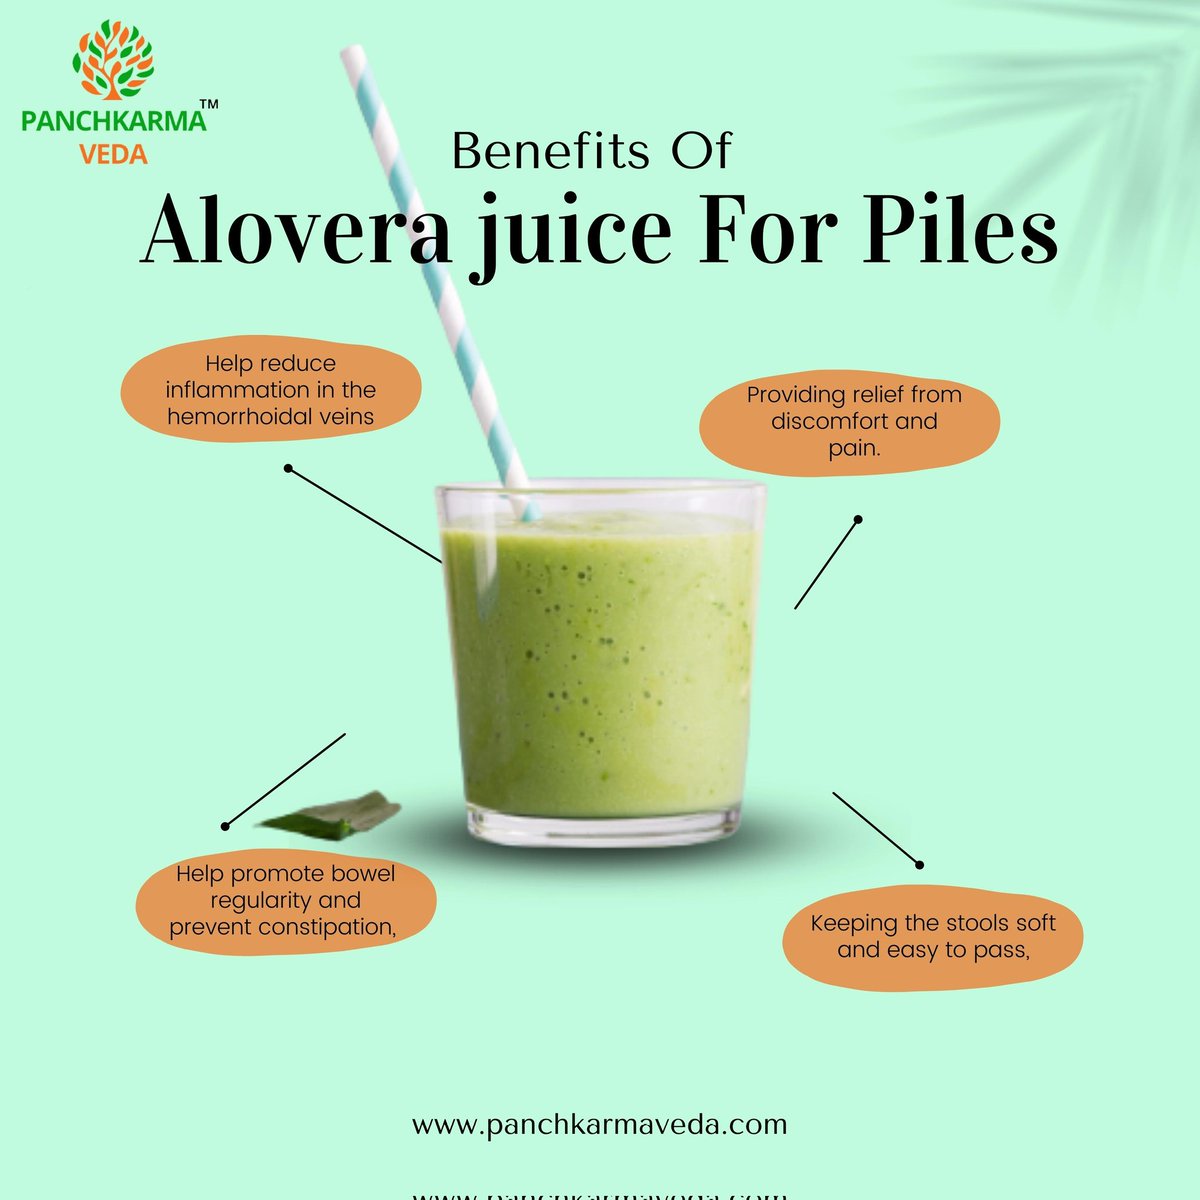 Benefits Of Aloe Vera Juice For Curing Piles At Home.

panchkarmaveda.com
#ayurveda #piles #naturalremedies #PANCHKARMAVEDA
#AyurvedaForBetterHealth #HerbalHealing #NatureCures #AncientRemedies #AyurvedicMedicineWorks #HealingTheNaturalWay #AyurvedicLifeStyle #HolisticHealth